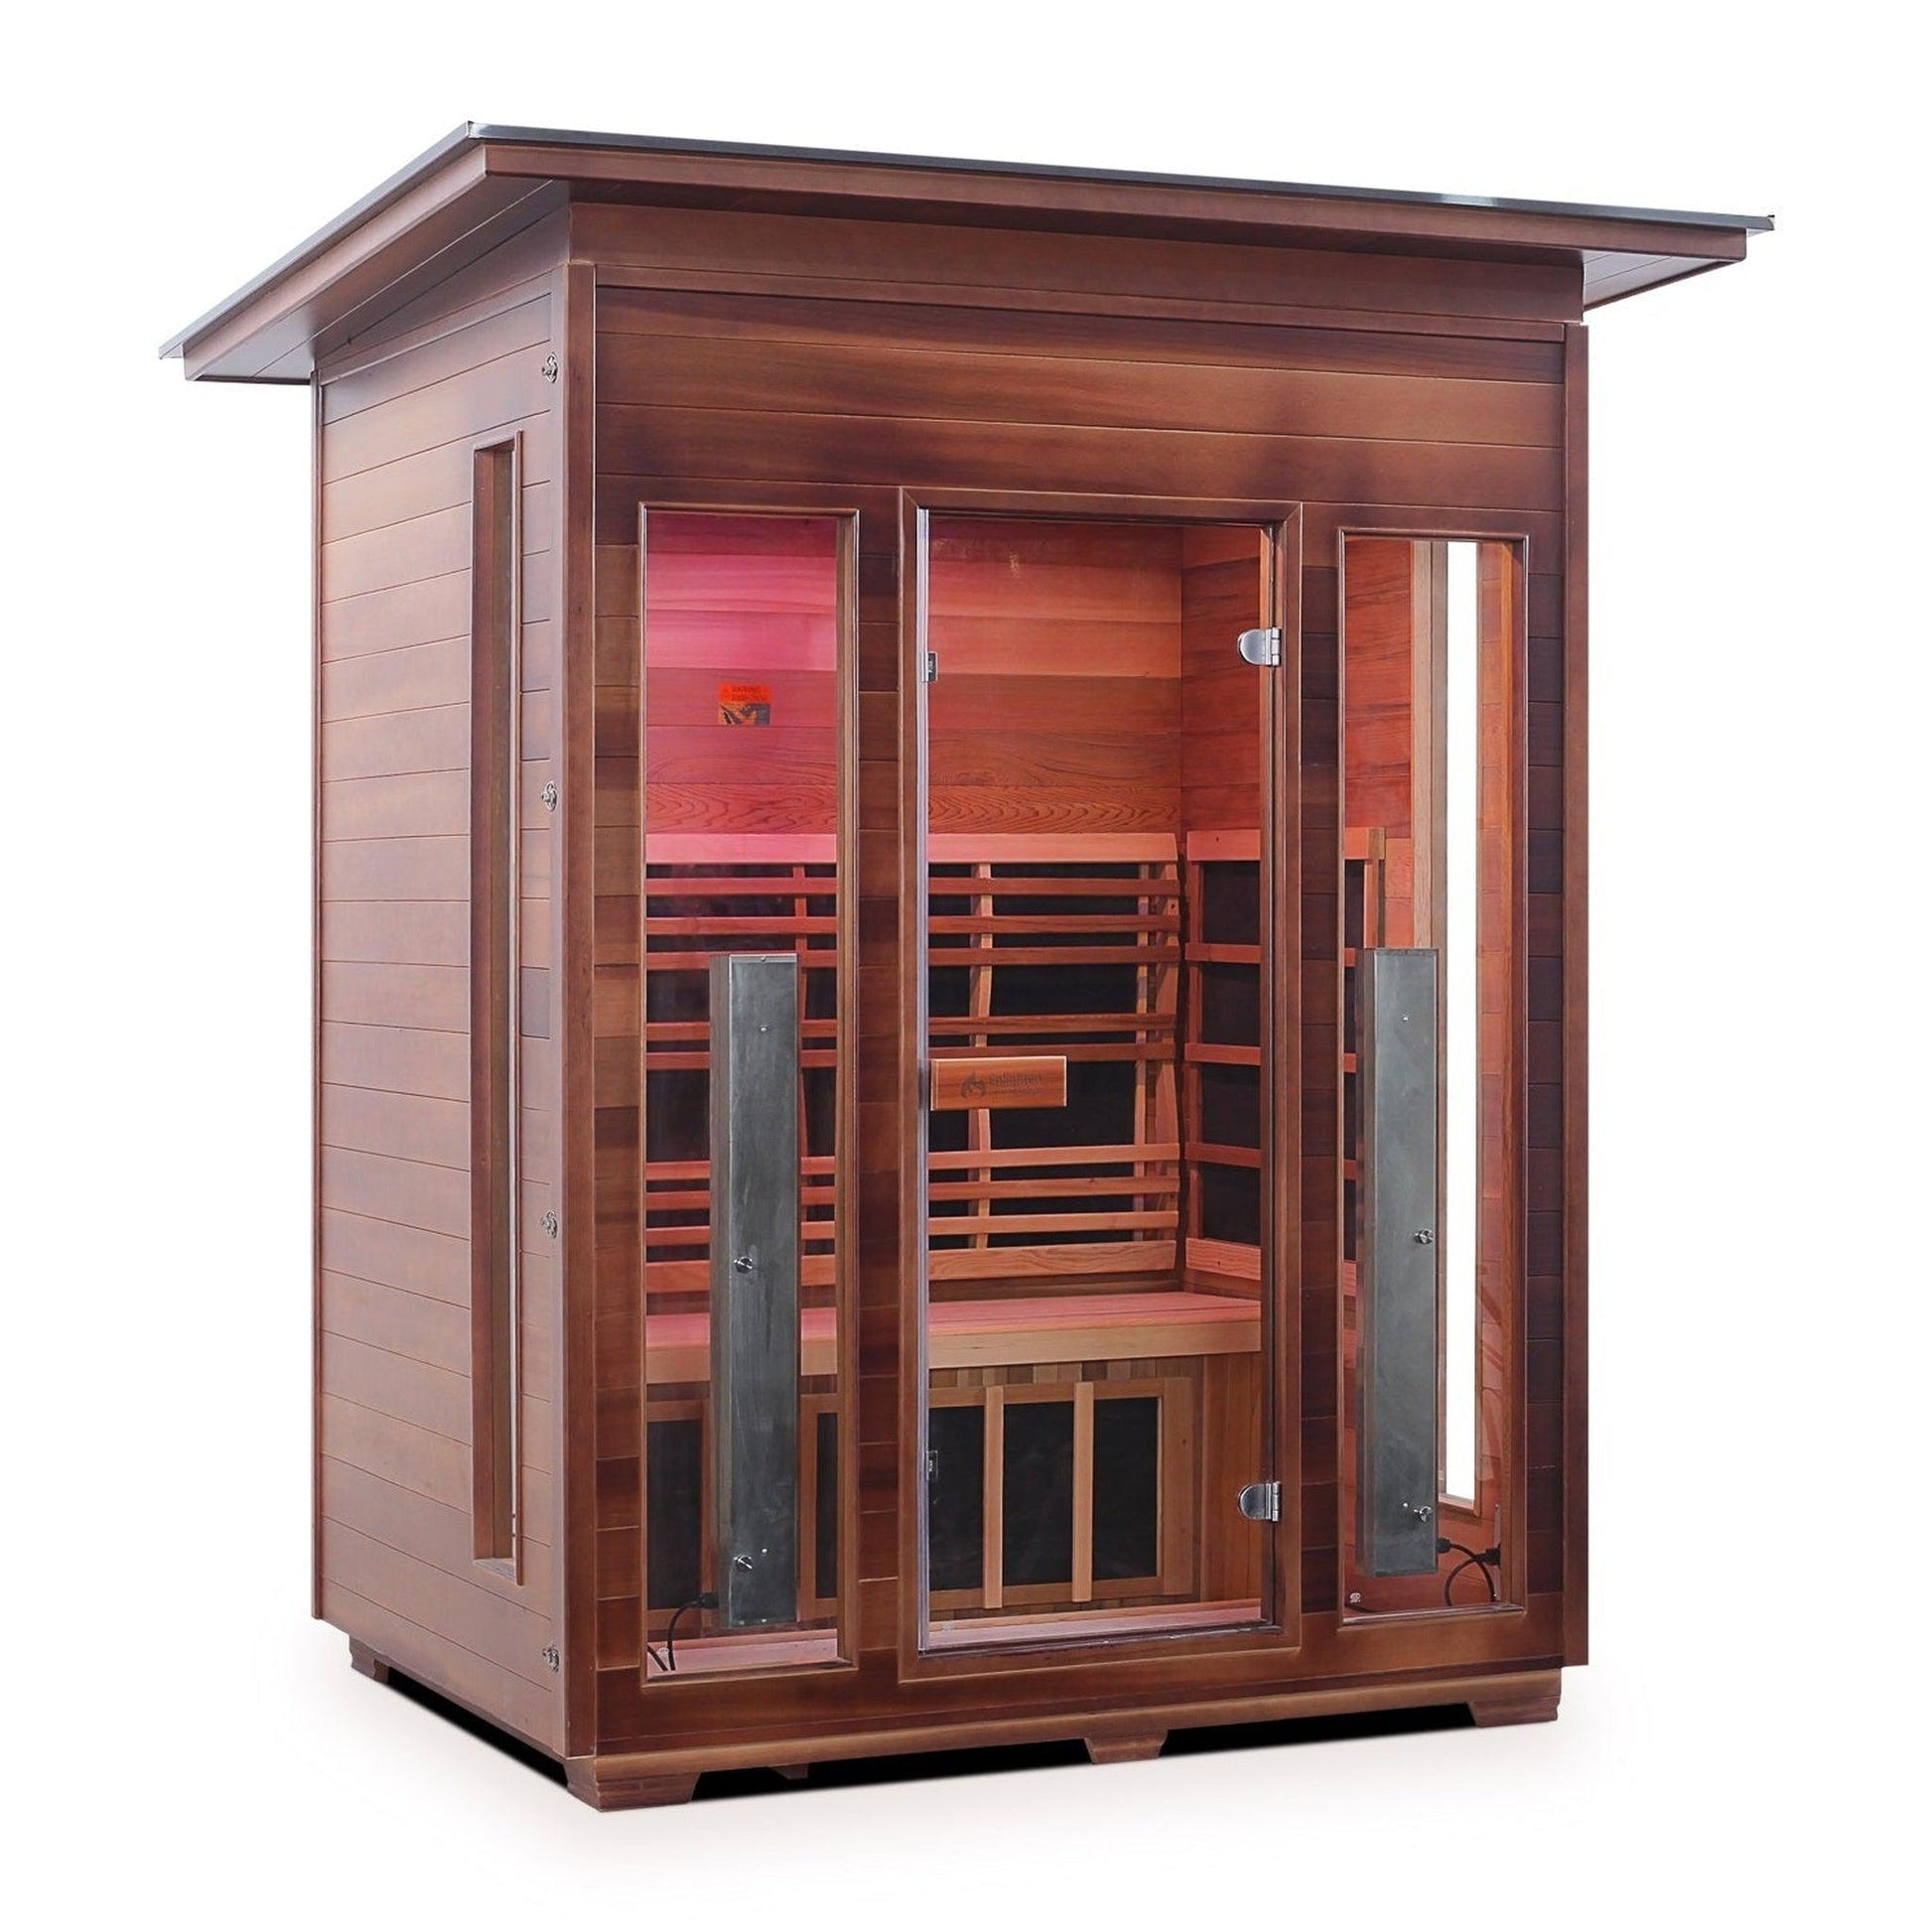 Enlighten InfraNature Duet Diamond 3-Person Slope Roof Hybrid Infrared/Traditional Outdoor Sauna